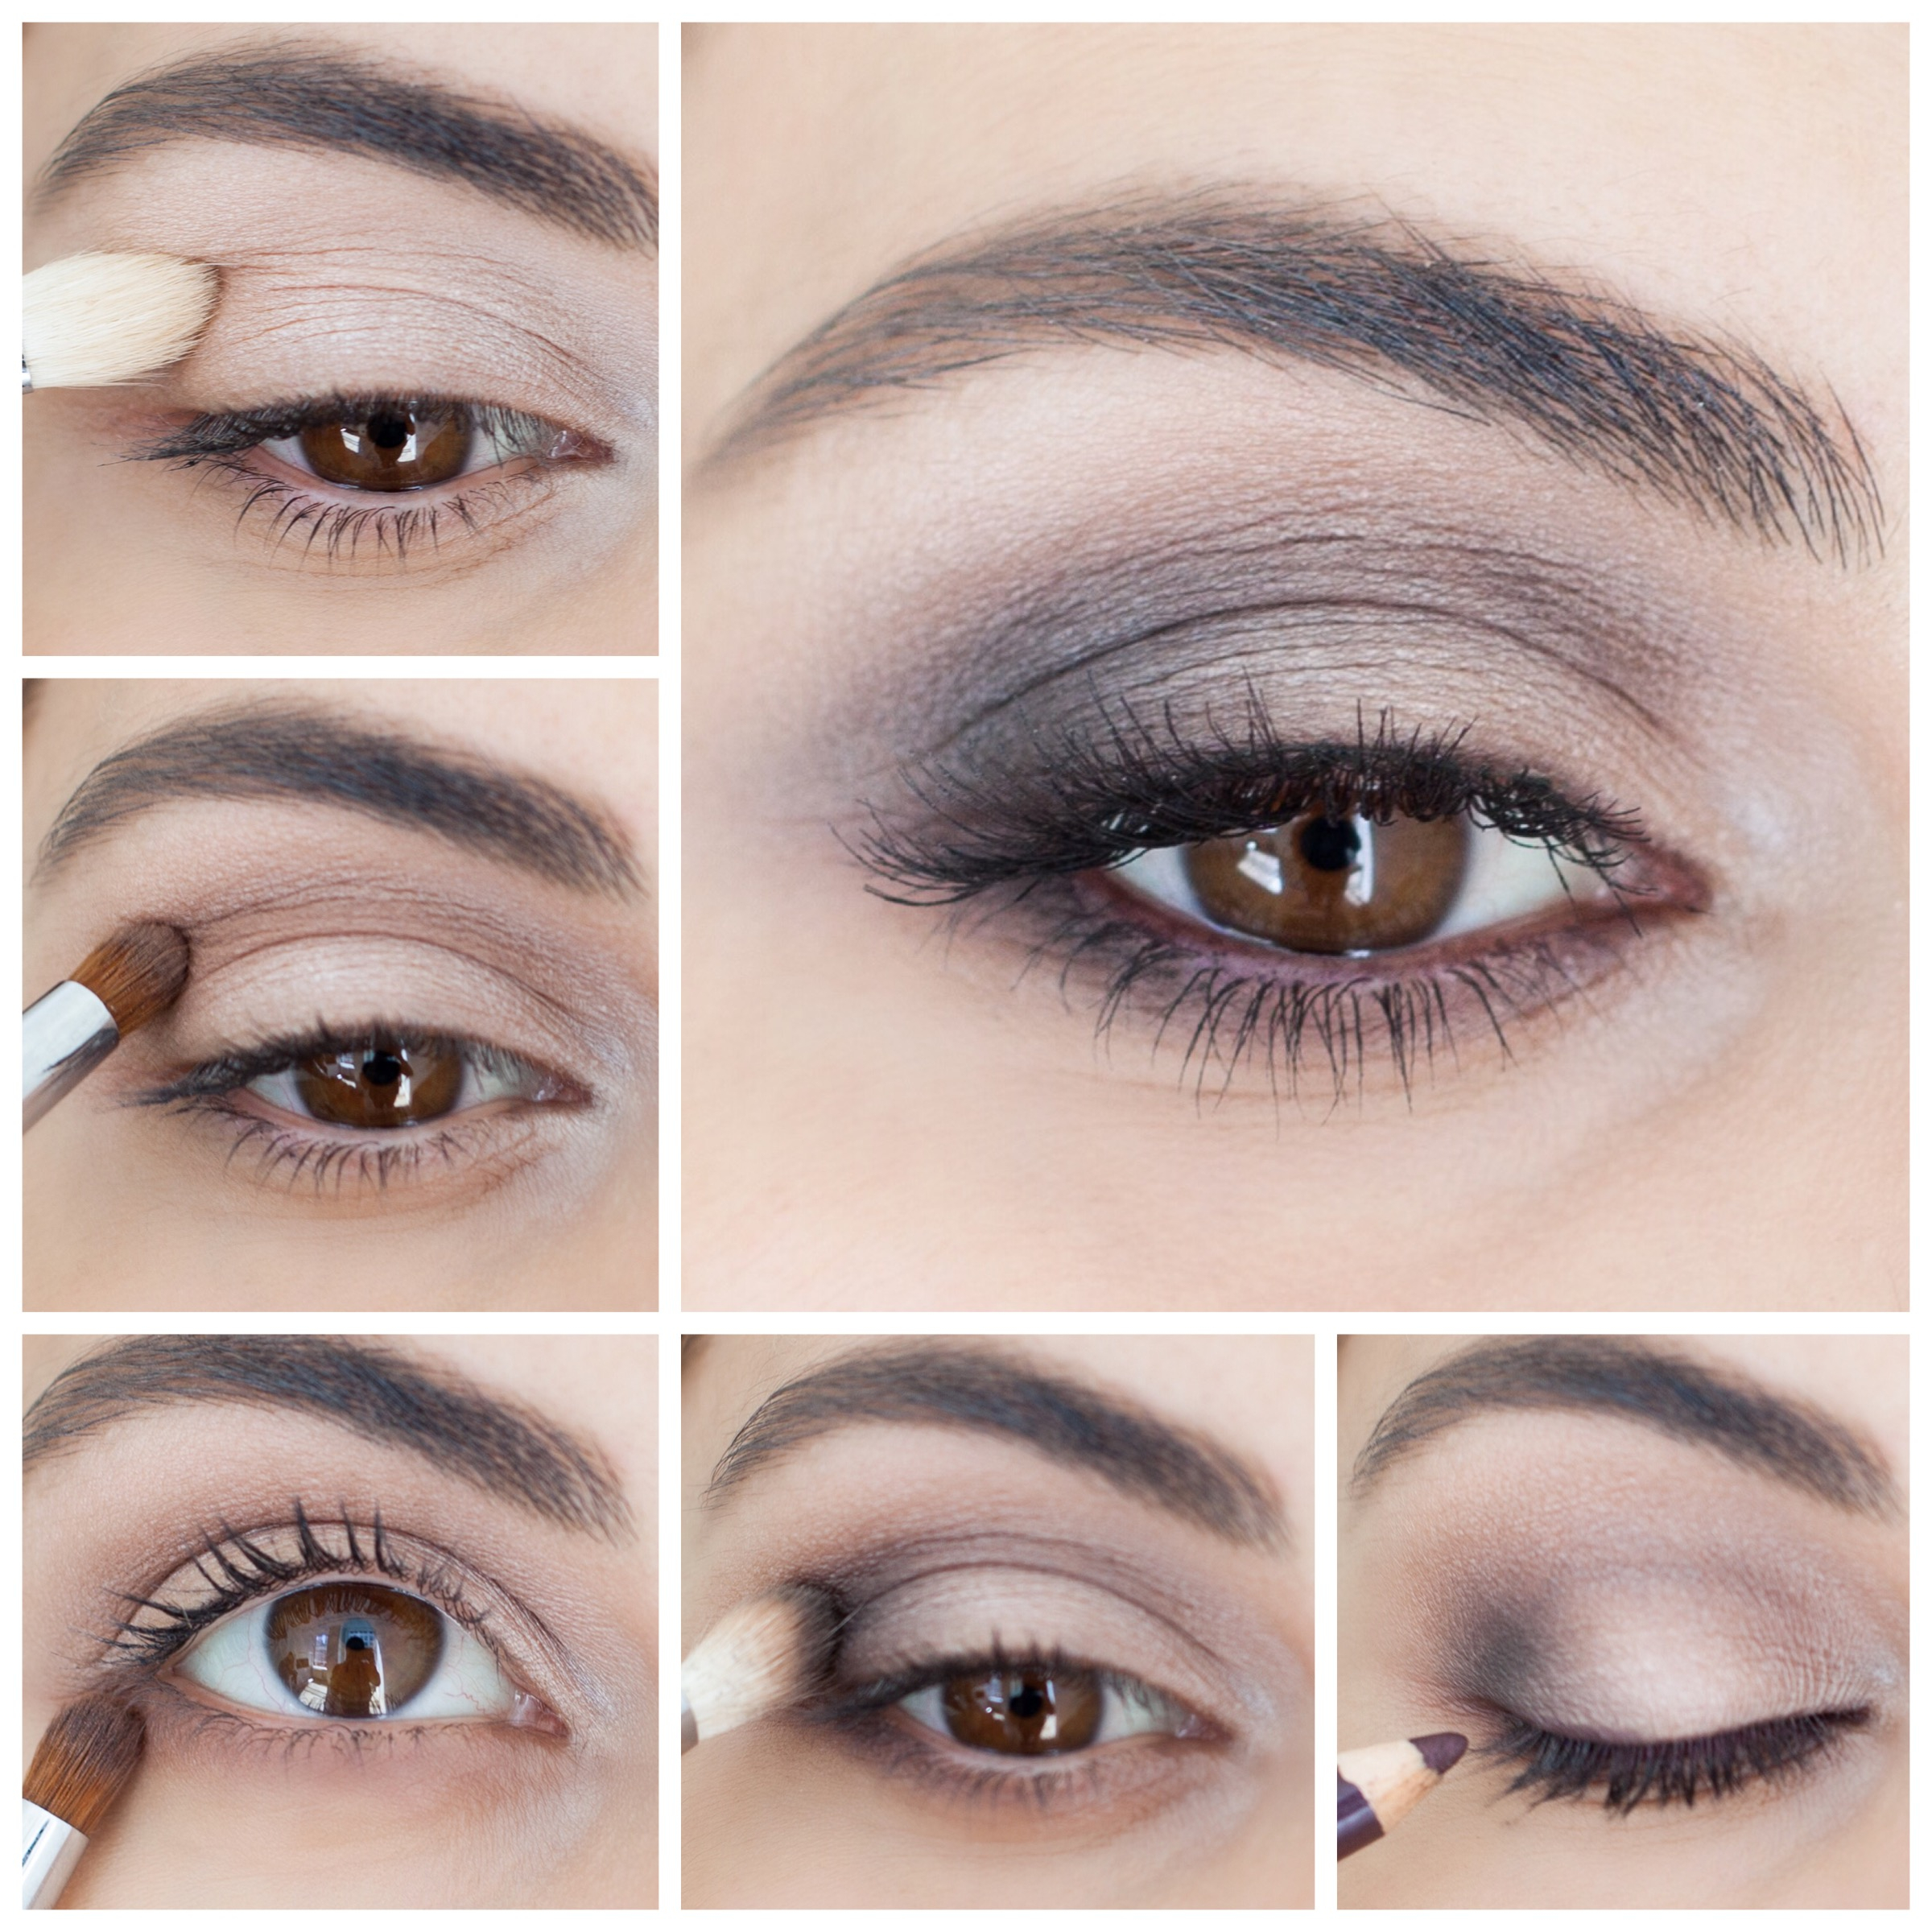 Makeup Ideas For Dark Brown Eyes 40 Hottest Smokey Eye Makeup Ideas 2019 Smokey Eye Tutorials For